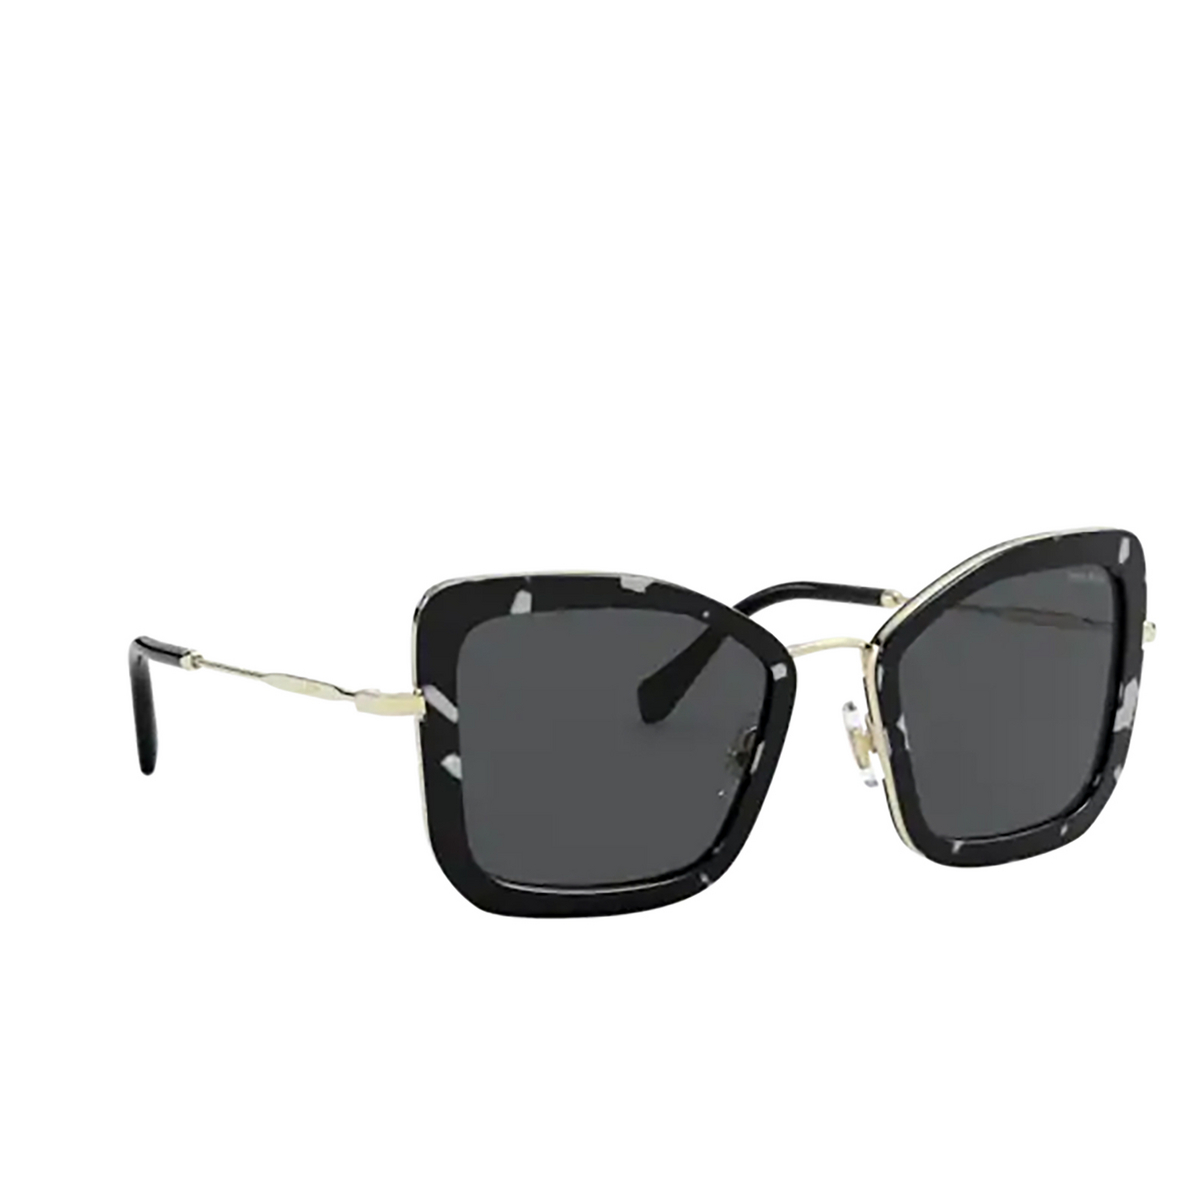 Miu Miu® Irregular Sunglasses: MU 55VS color PC75S0 Havana Black White - three-quarters view